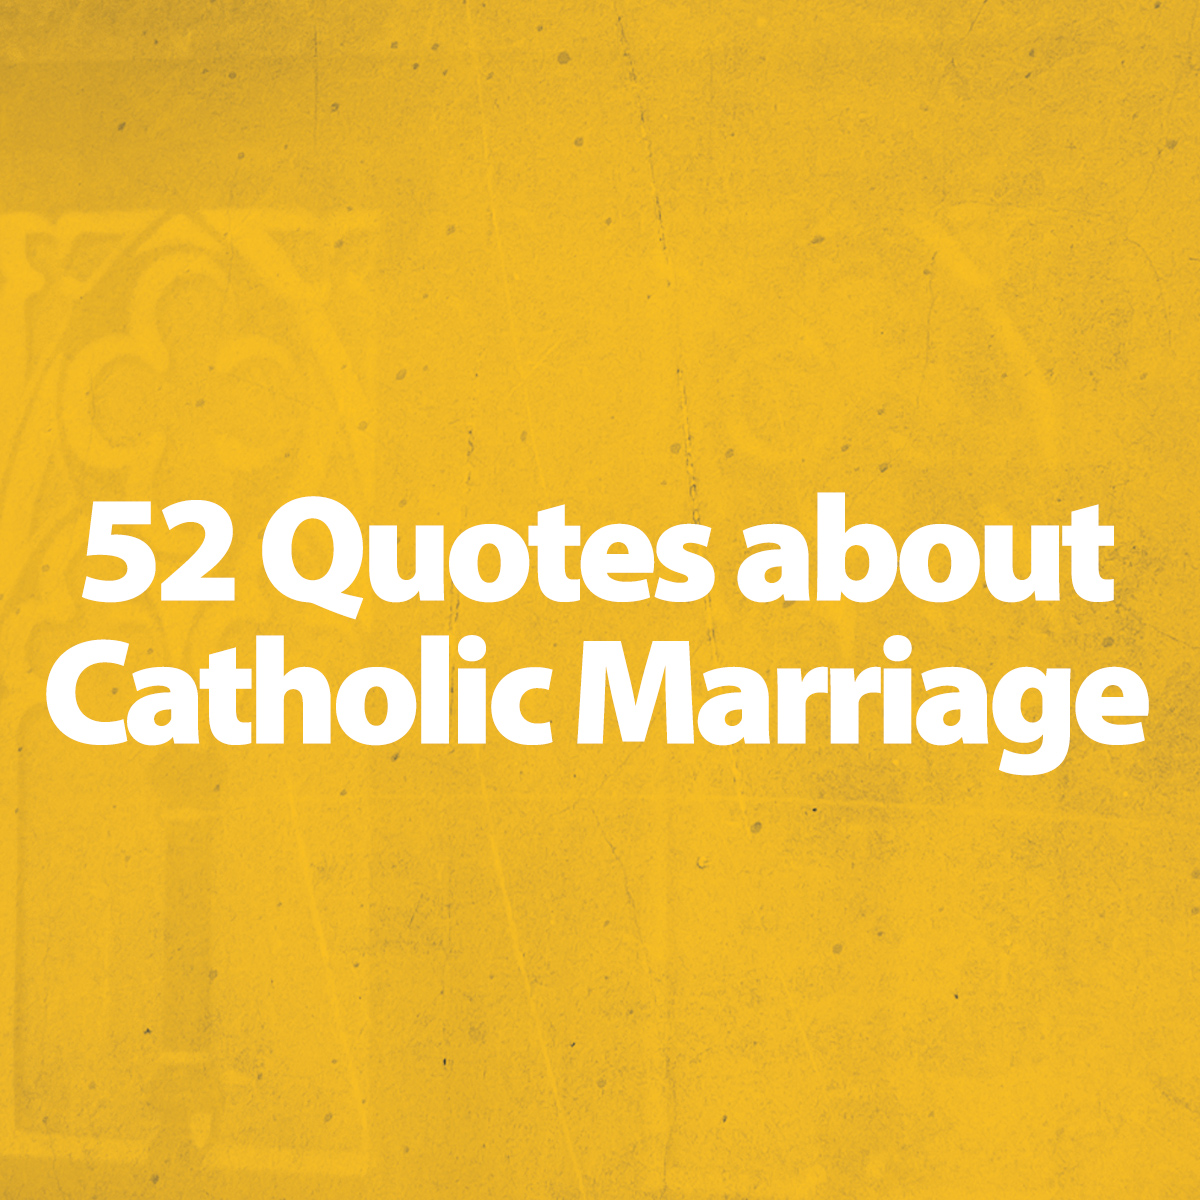 Catholic Marriage Quotes